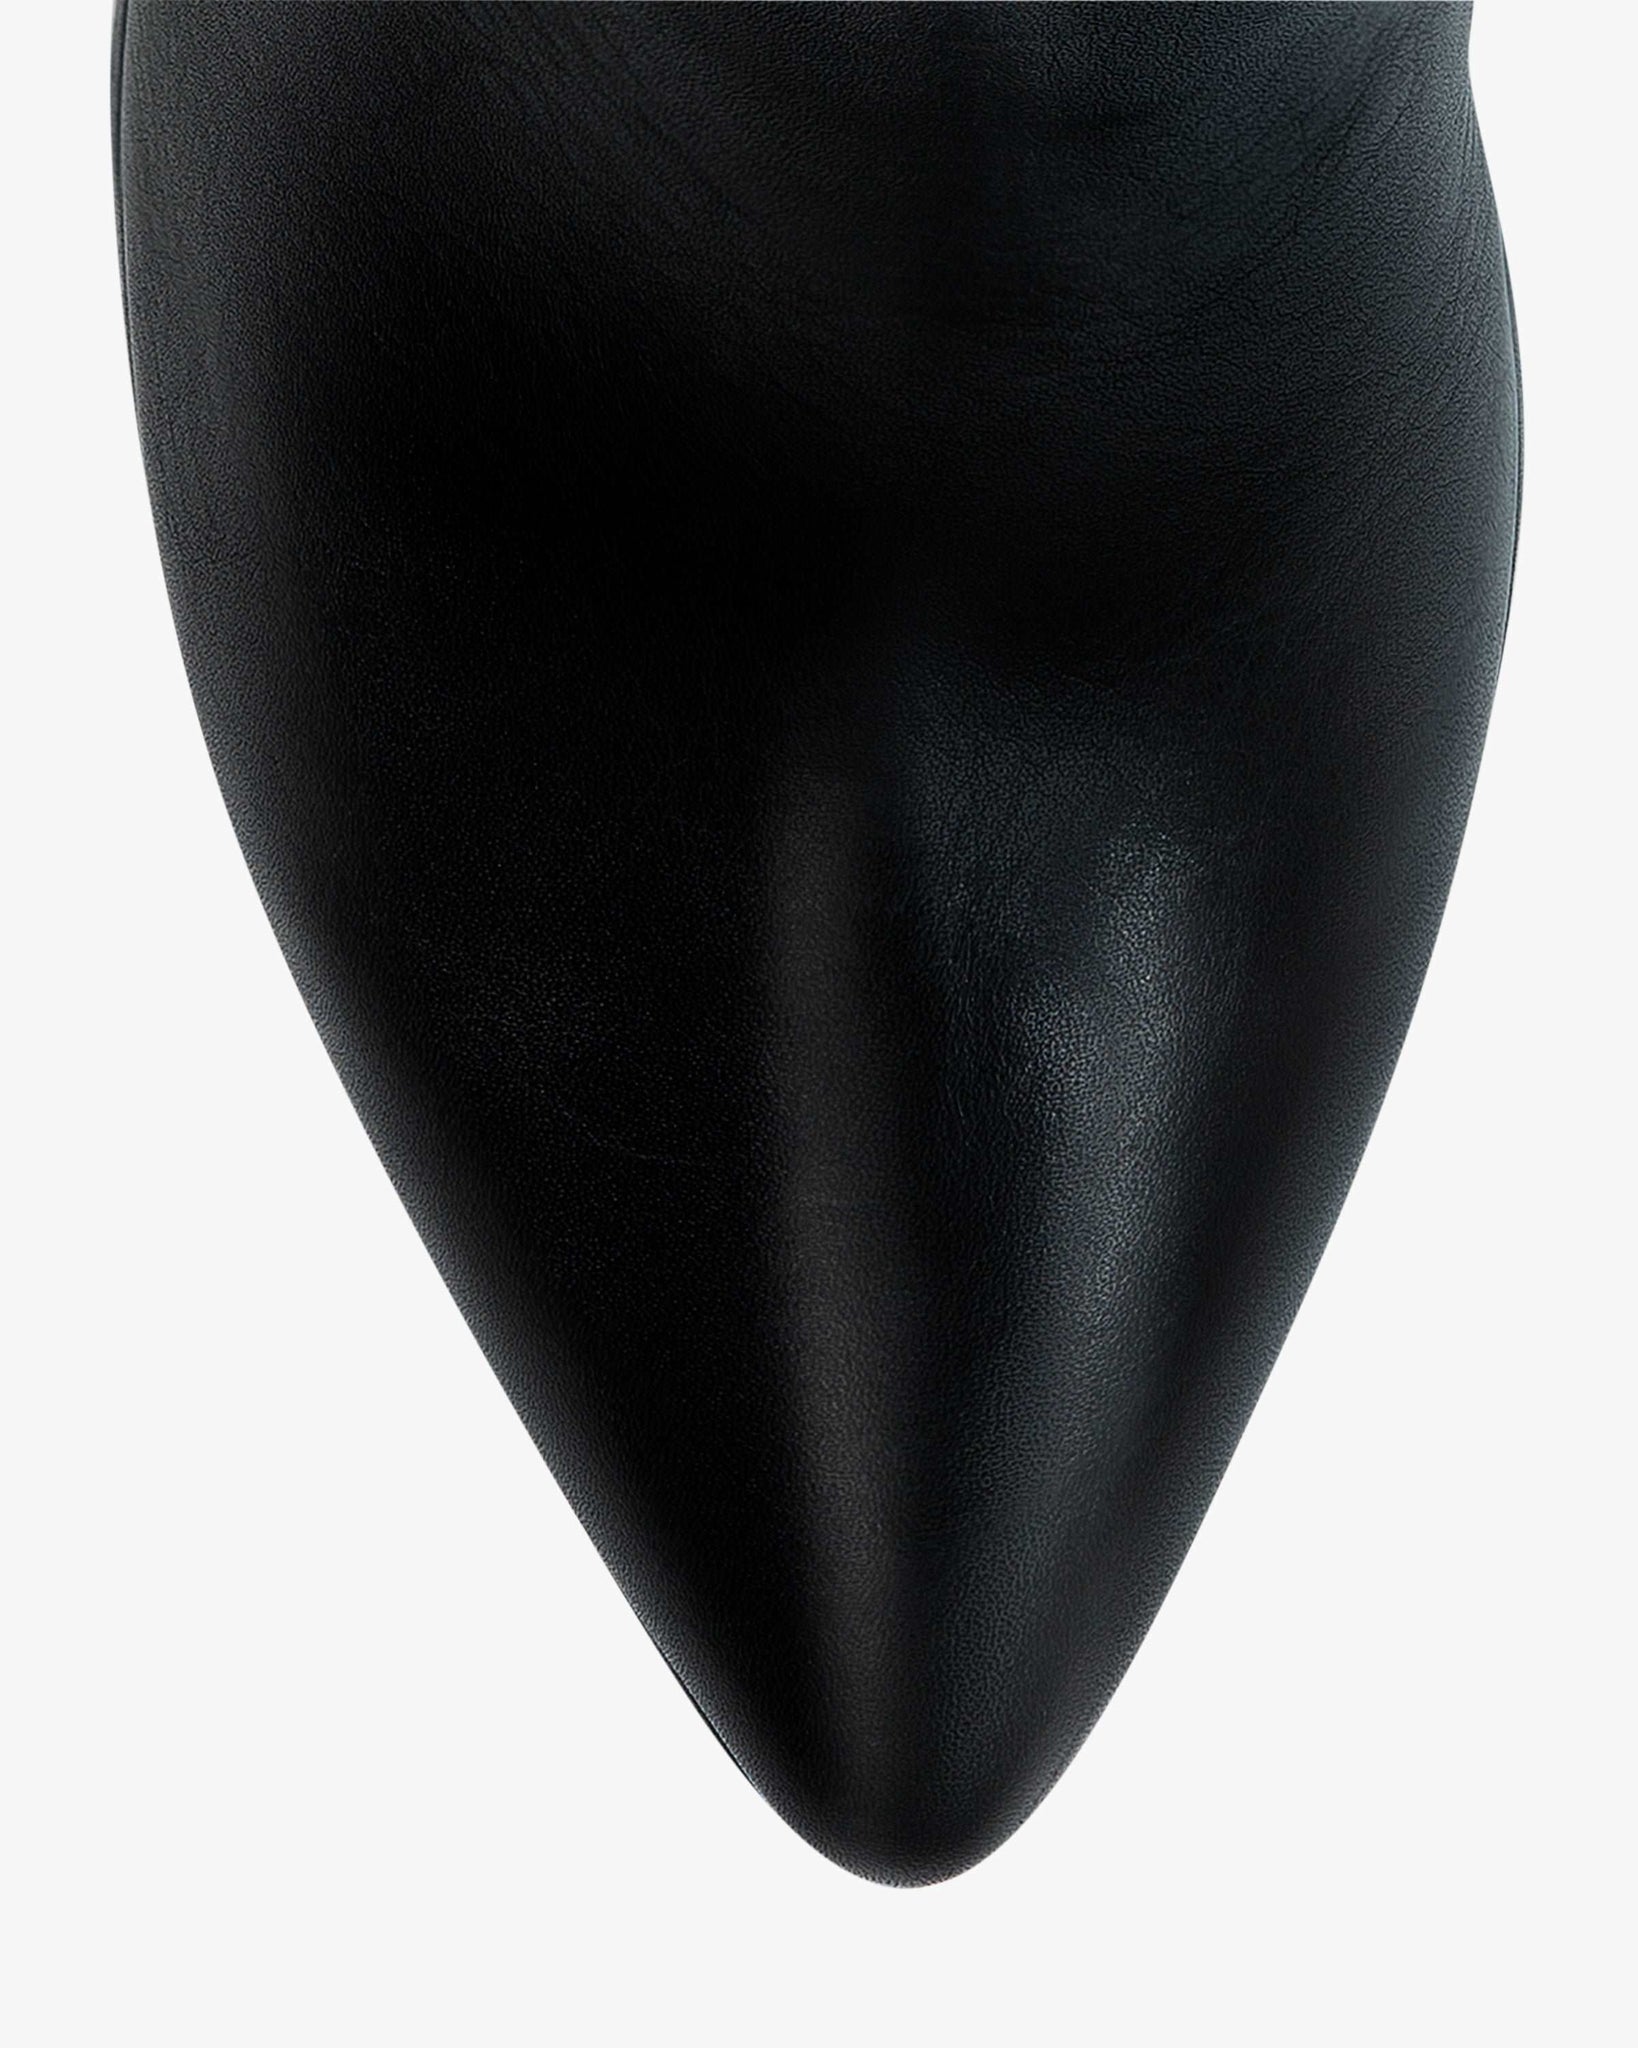 MARLOWE black leather by Allegra James